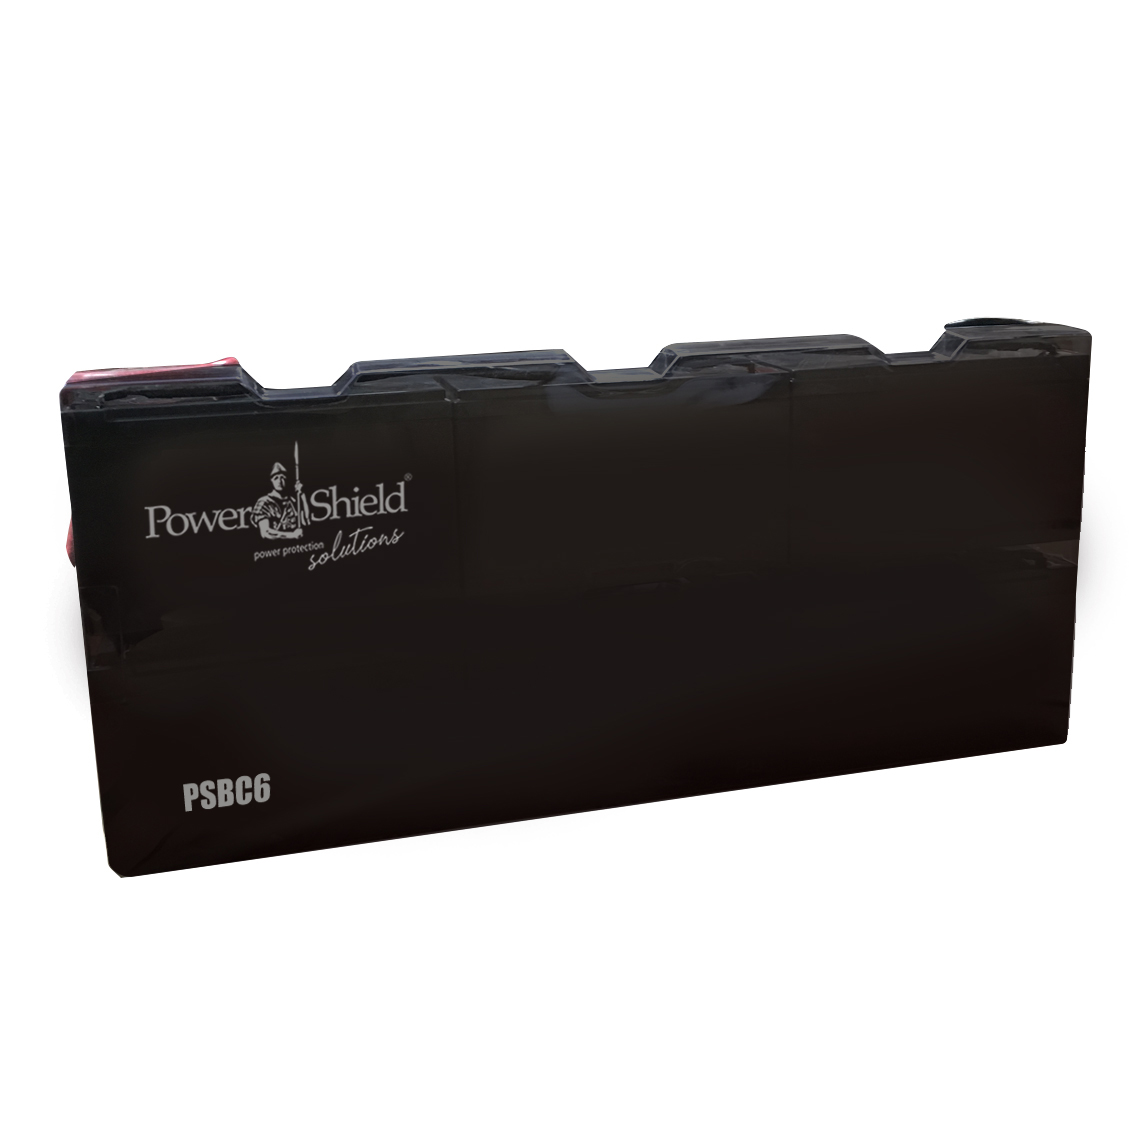 PowerShield Battery Cartridge 6 to suit the PSCRT3000, PSCERT2000, PSCERT3000 & PSRTBB12